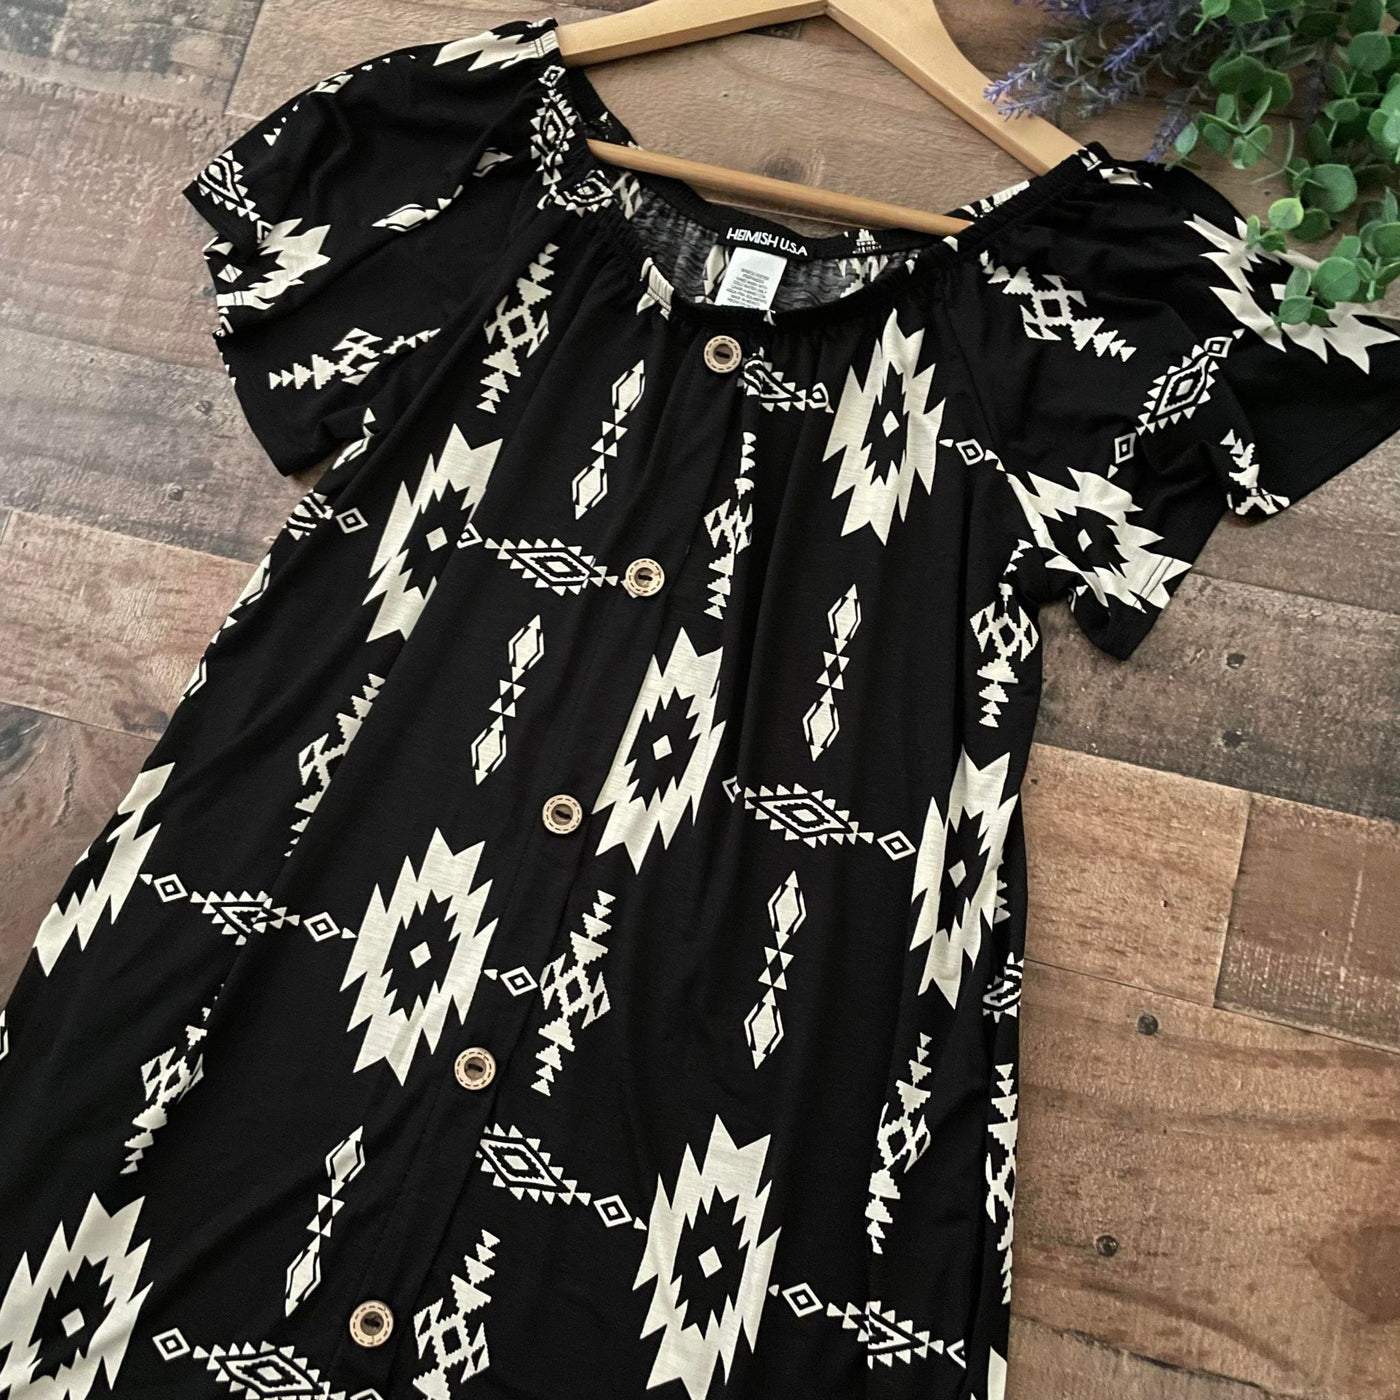 Black and Cream Aztec Print Dress with Versatile Neckline